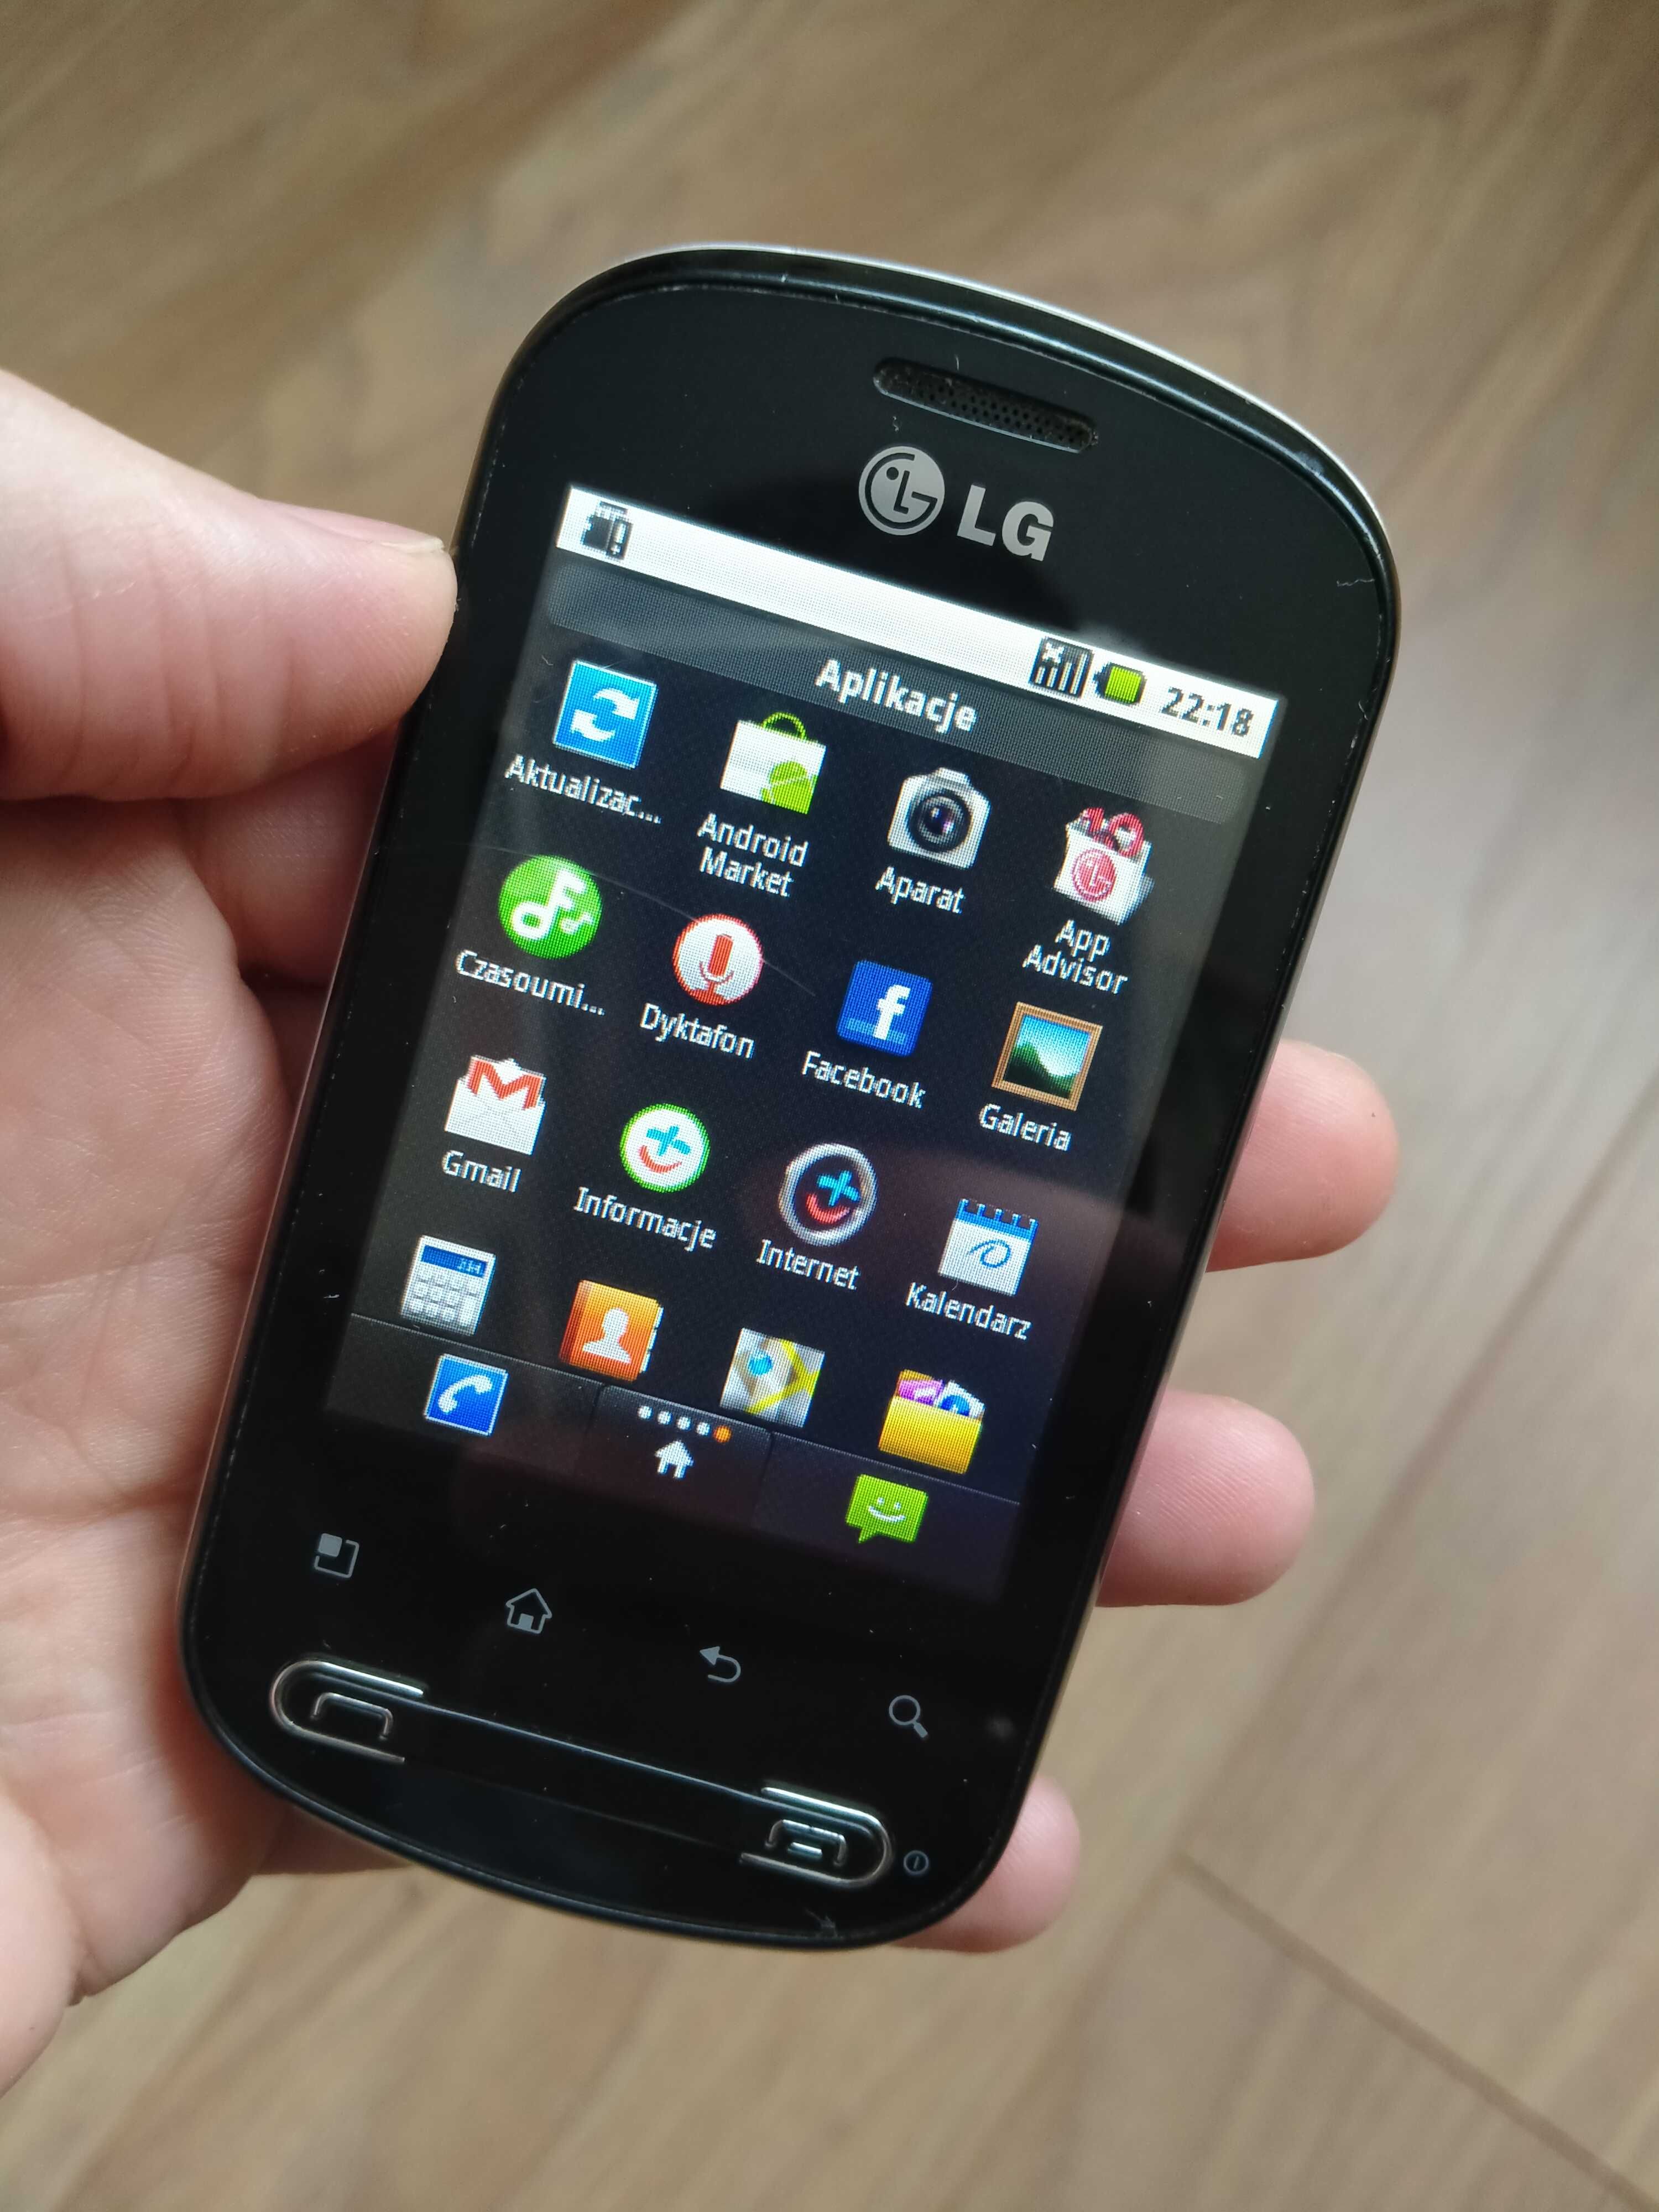 Smartfon LG Optimus P350 smartfon, stan bdb, działa jak nowy